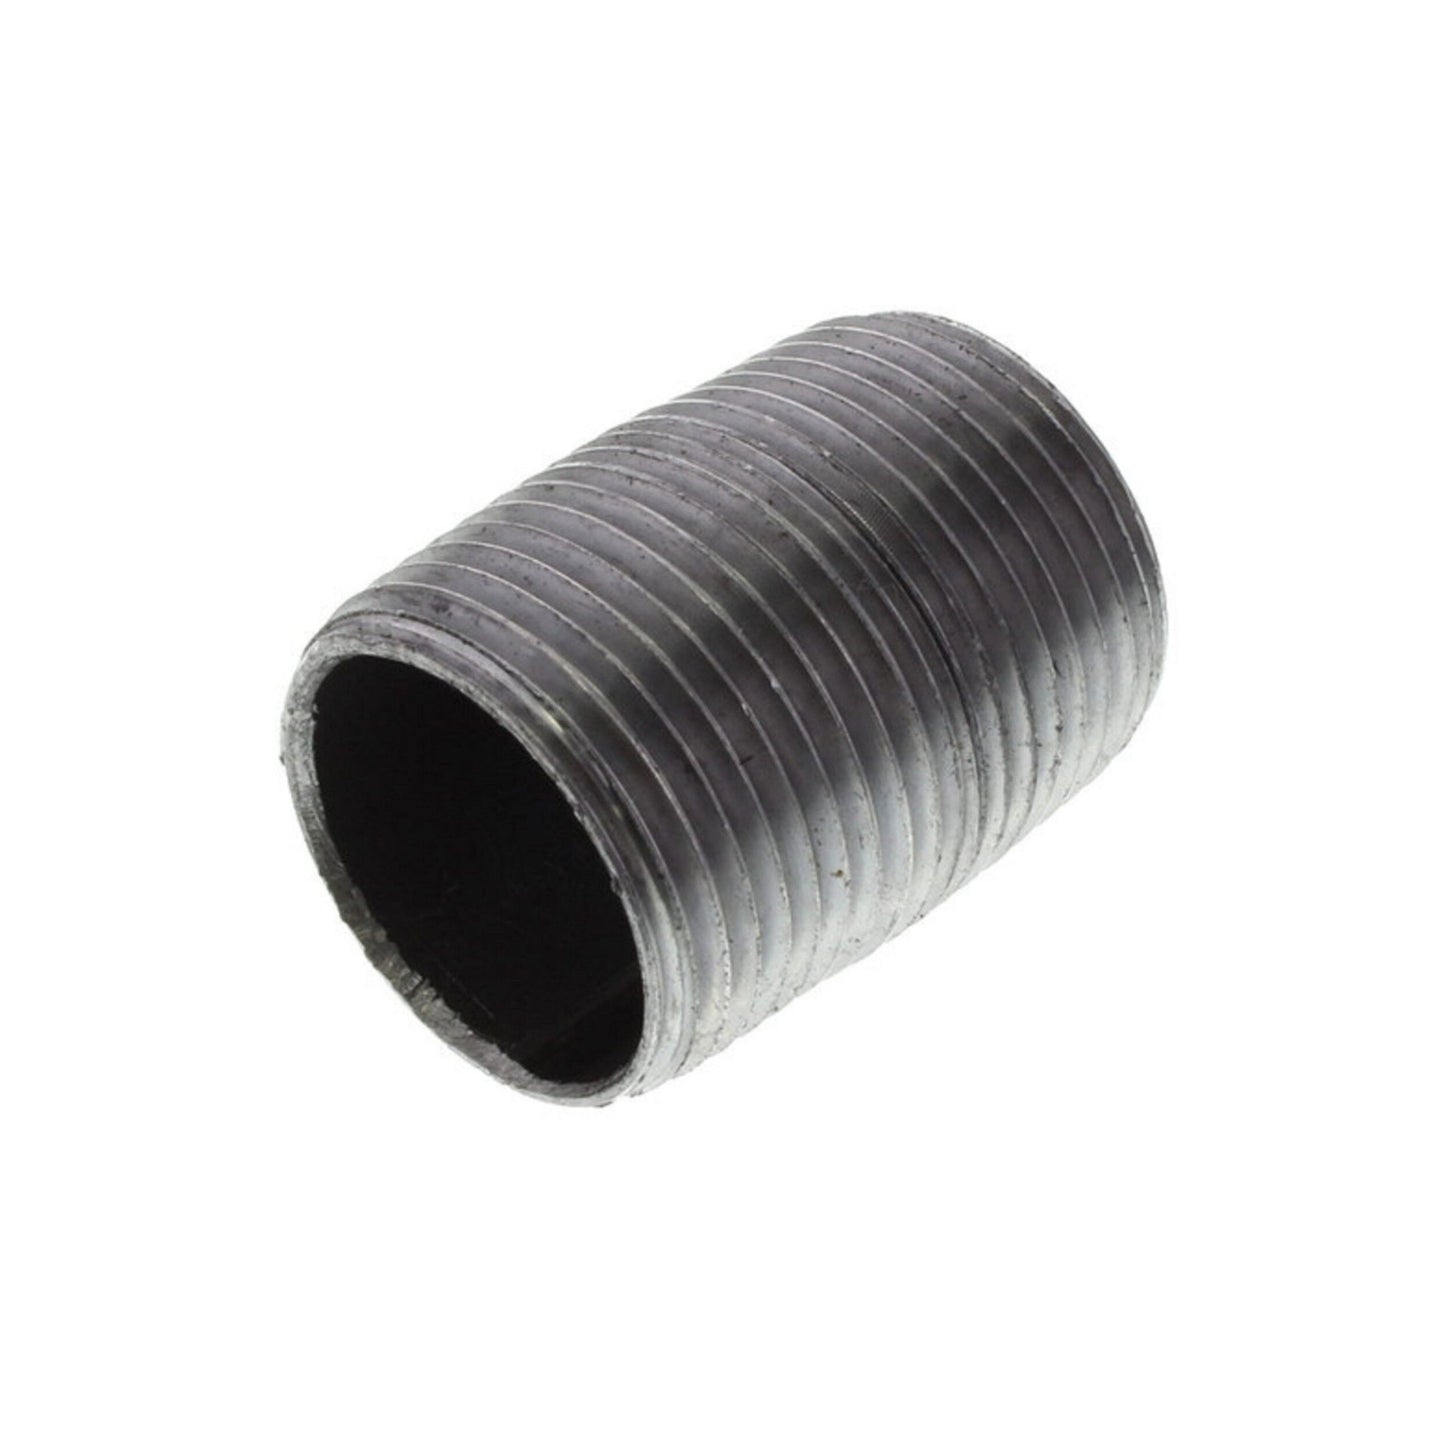 ZNB04CL - Black Steel Pipe Nipple - Domestic - 3/4" x Close